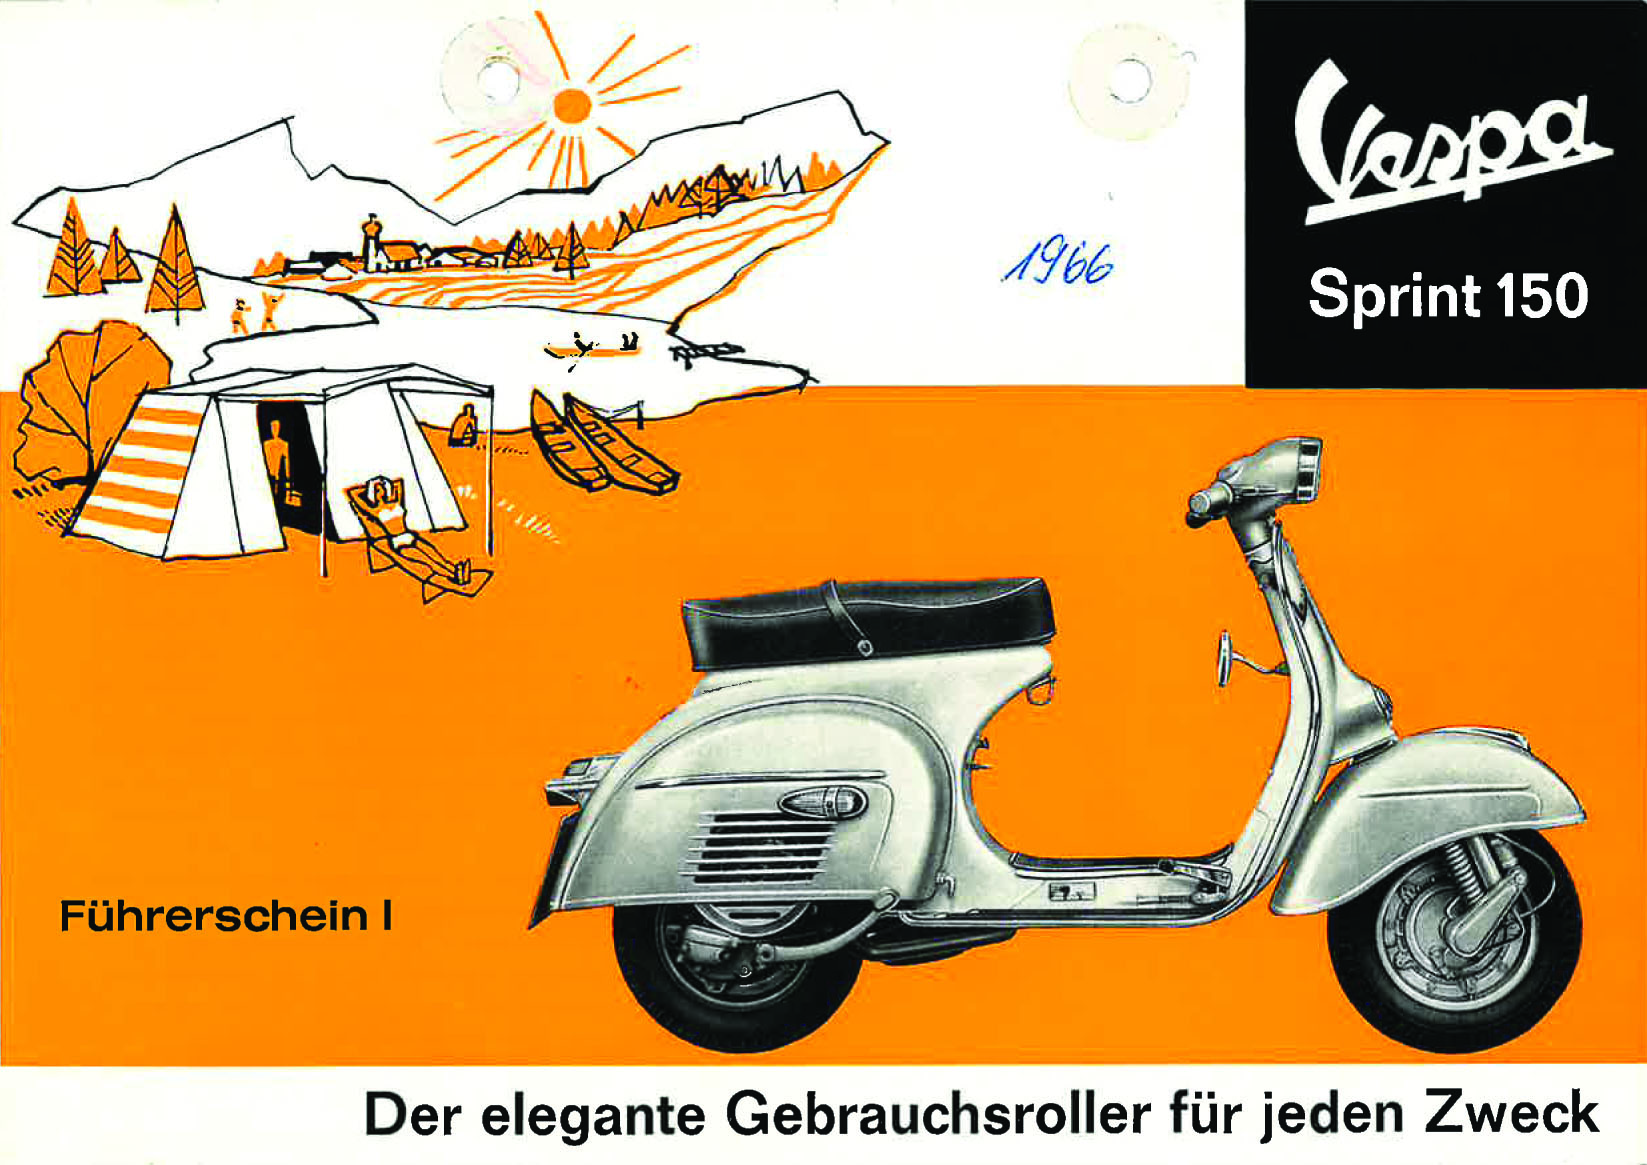 Vespa-150-Sprint-Augsburg Prospekt 01.jpg